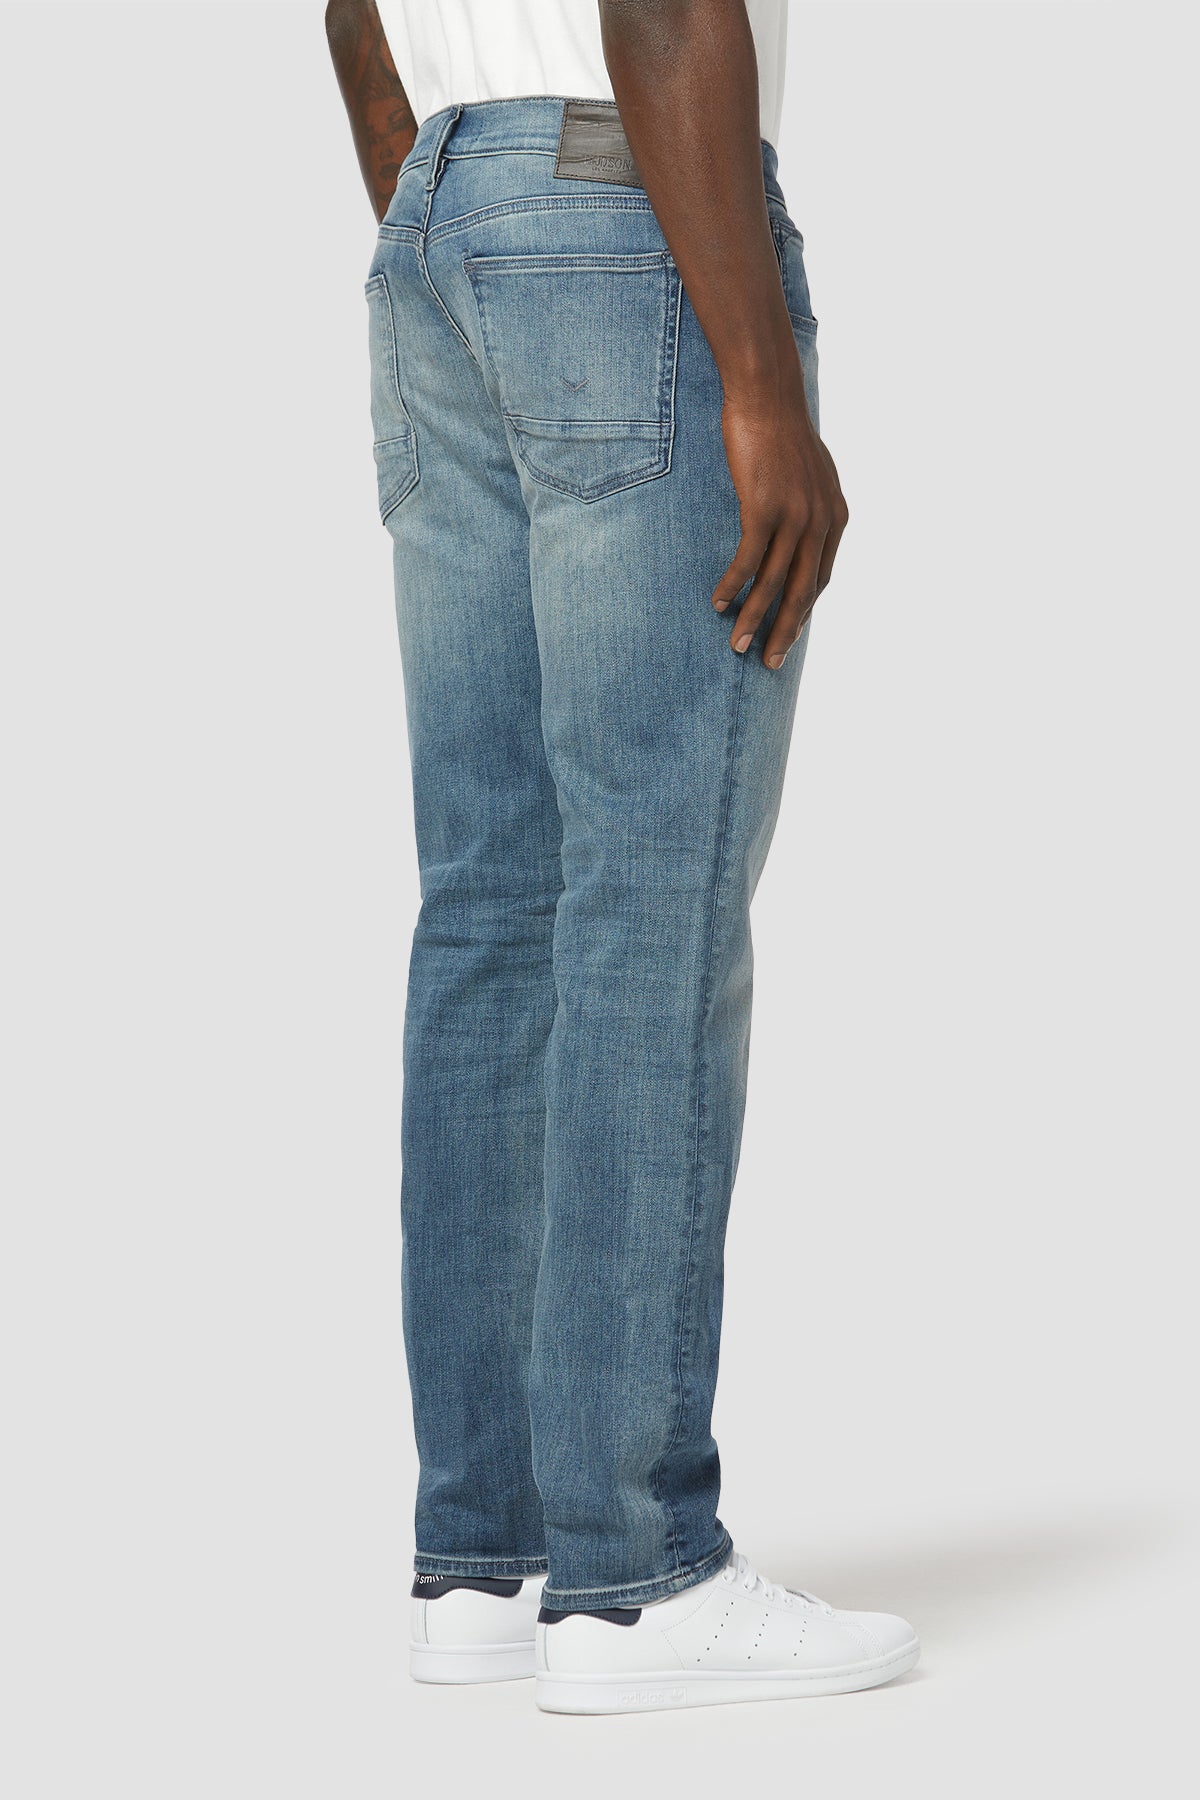 Blake Slim Straight Jean   Premium Italian Fabric   Hudson Jeans